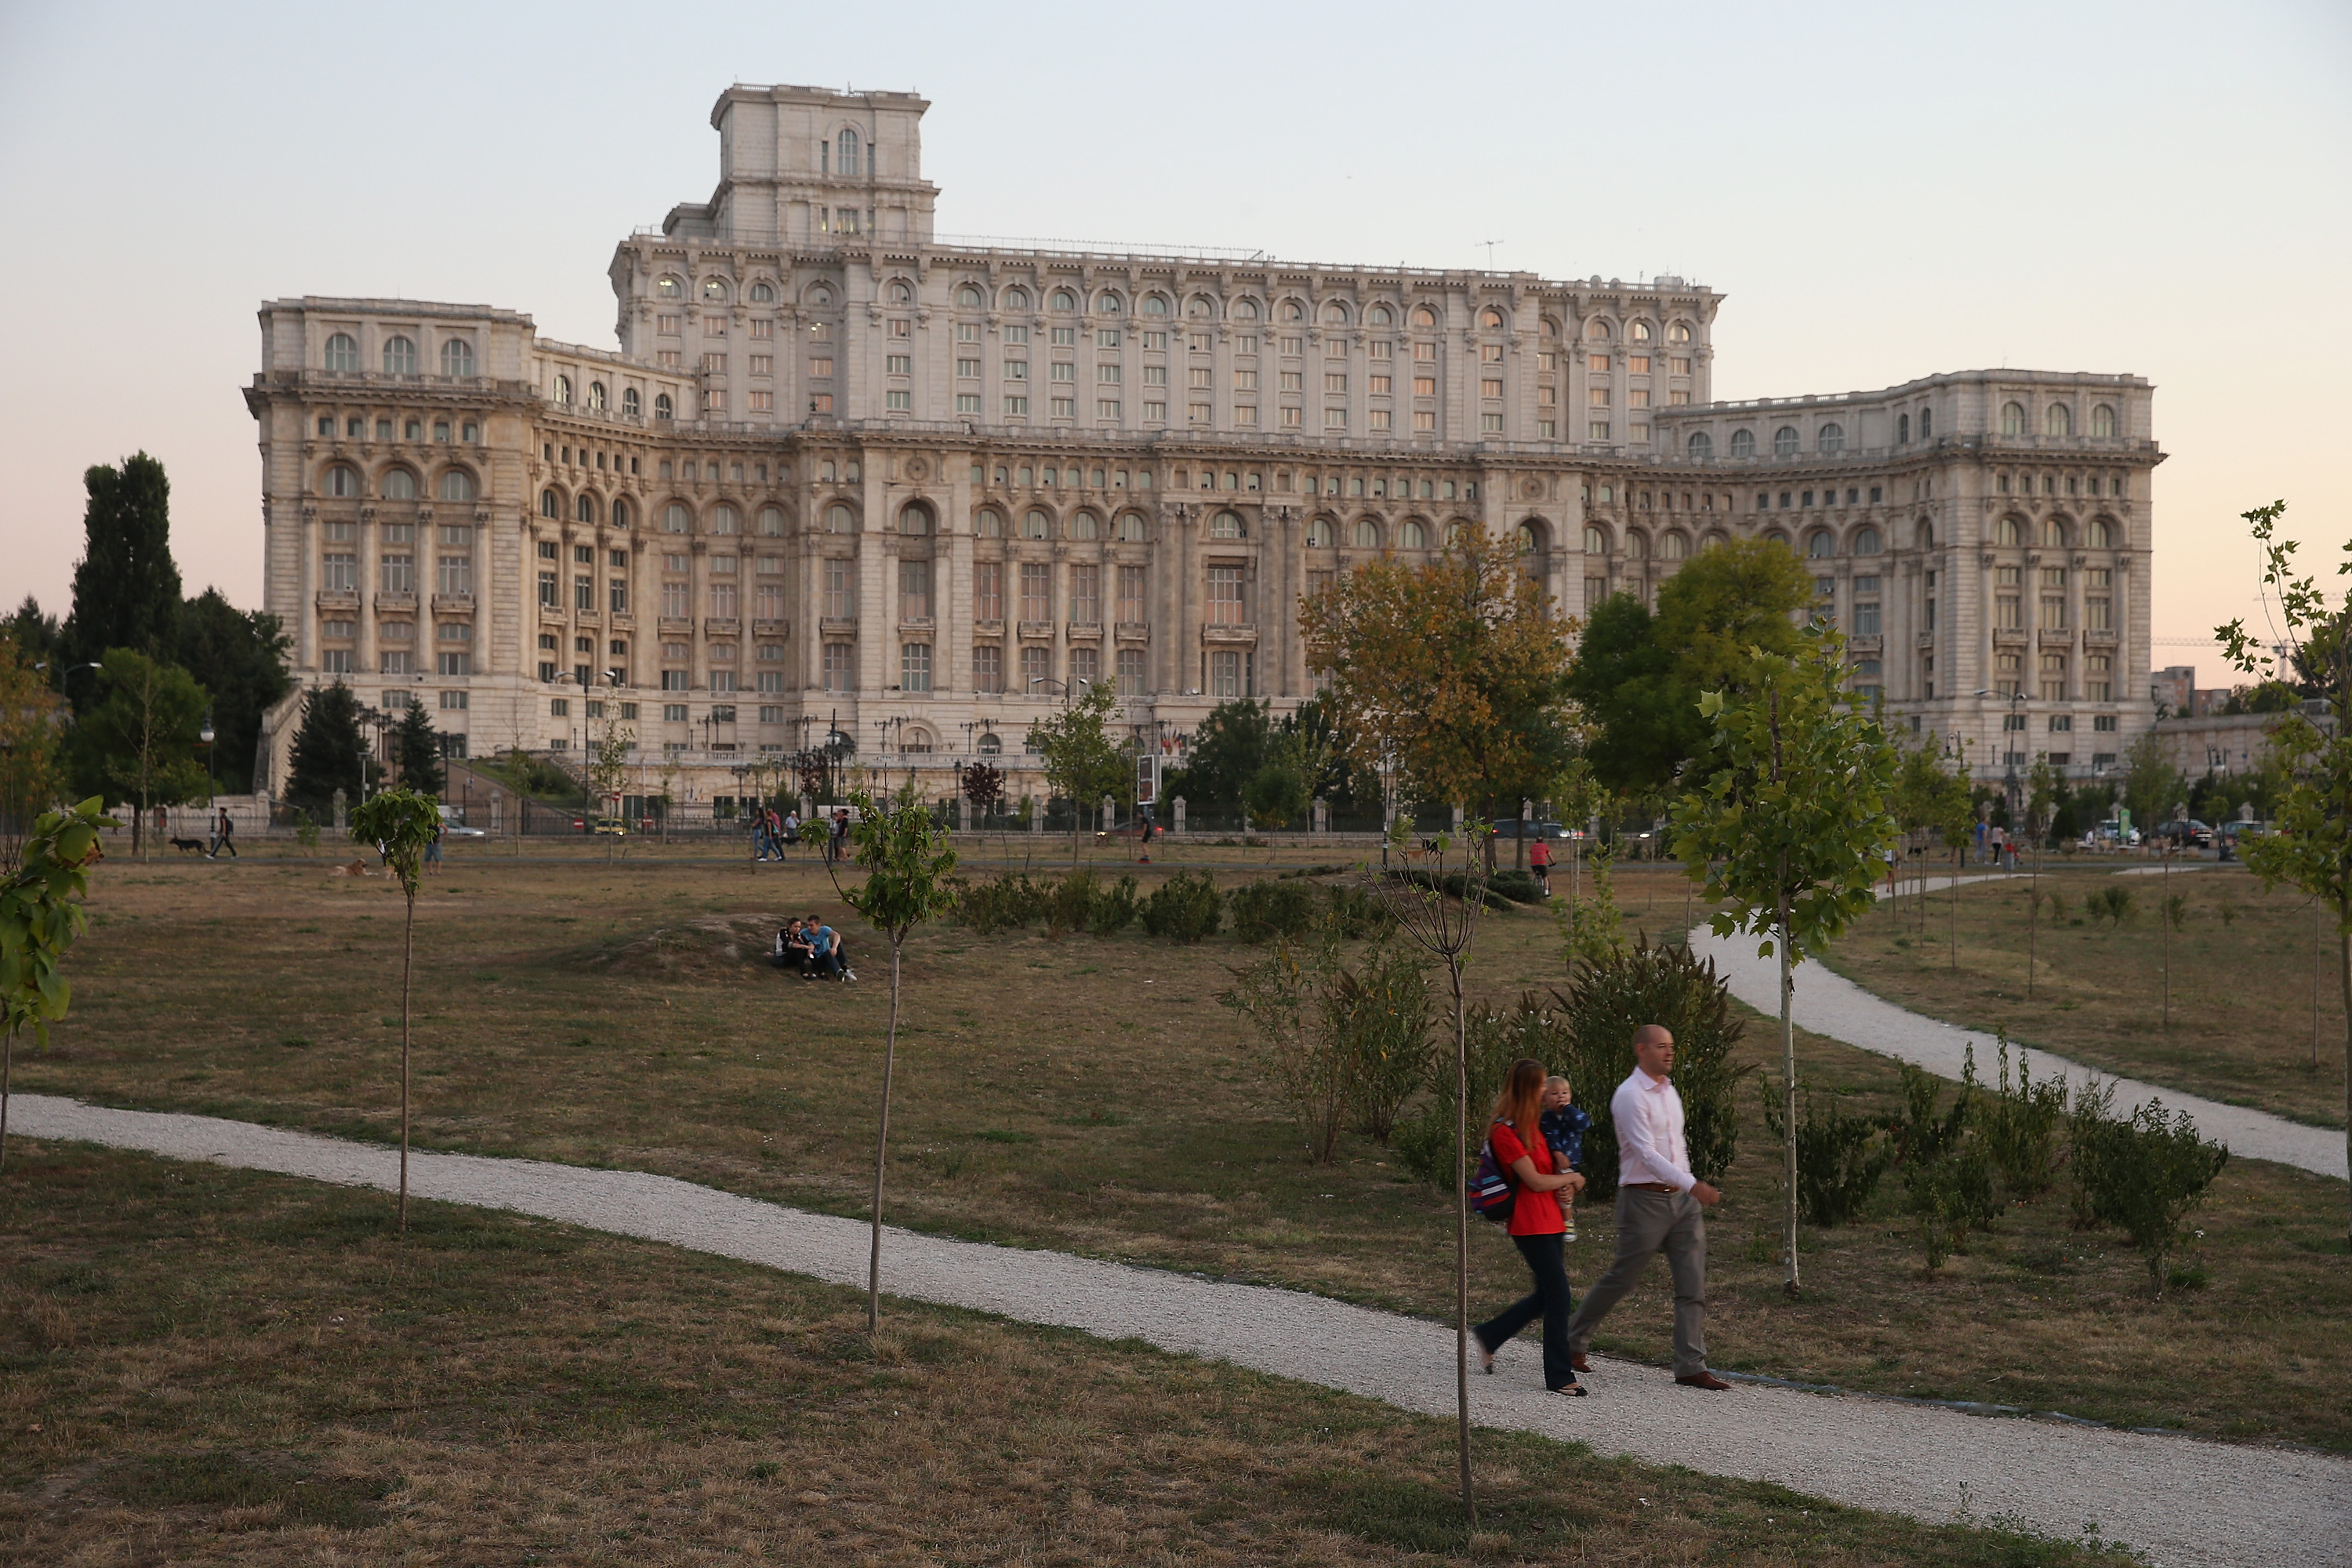 ”Дворецът” на Николае Чаушеску в Букурещ